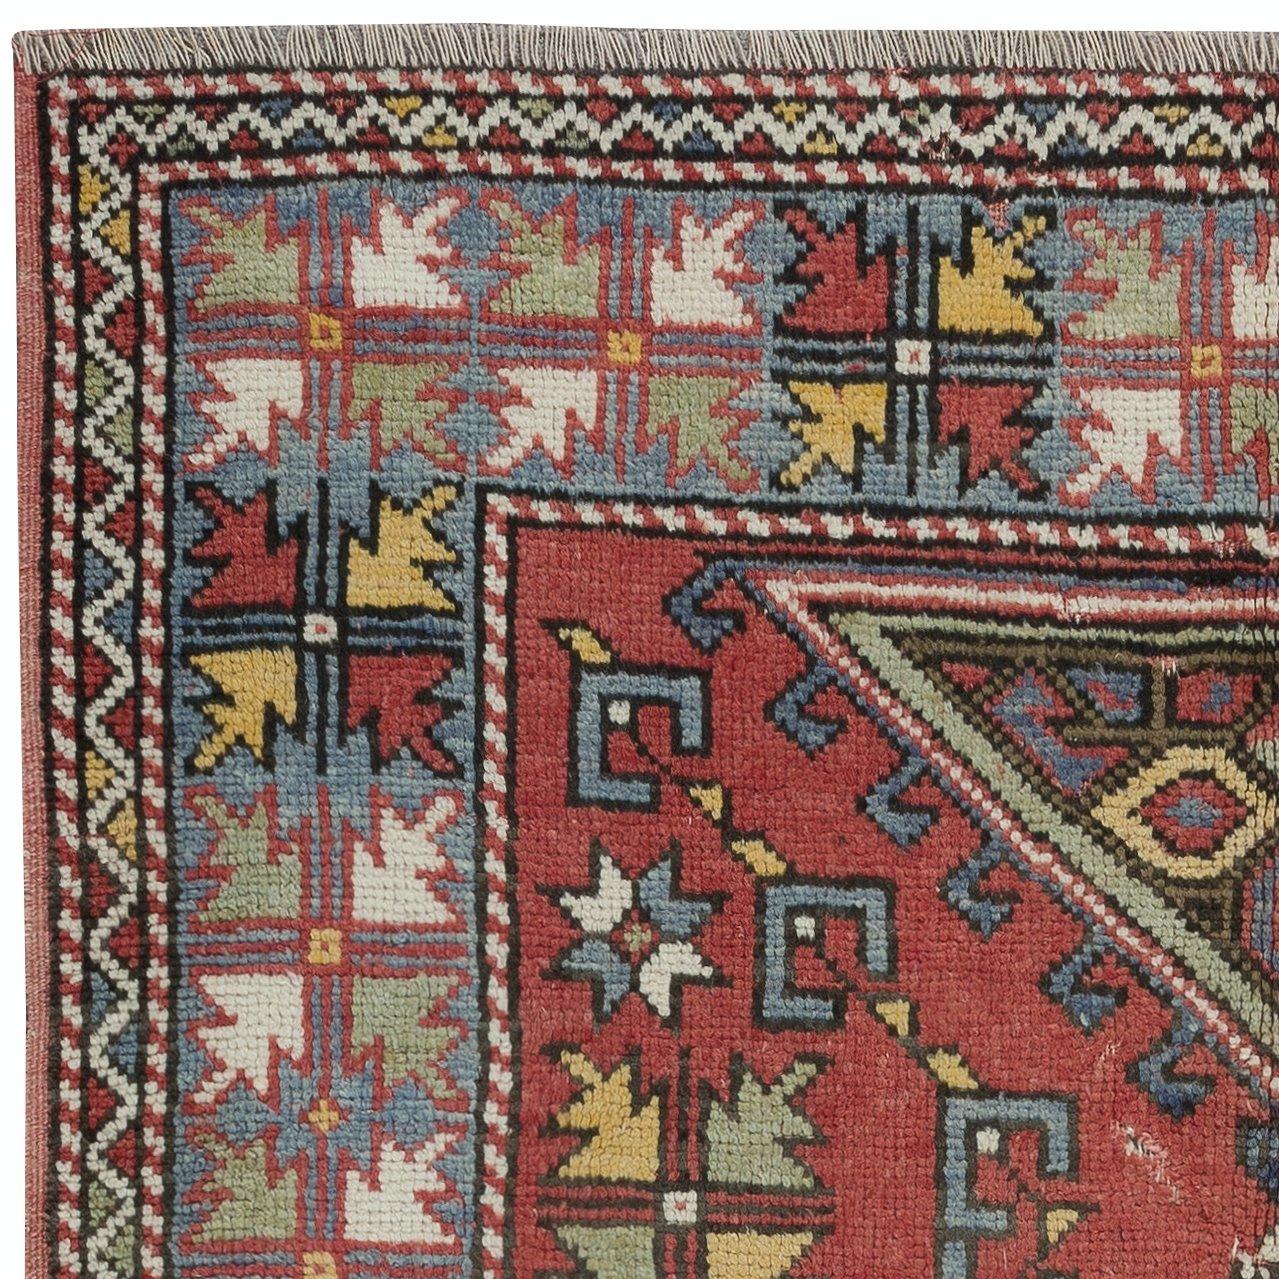 Hand-Knotted 4x5.8 Ft Handmade Geometric Medallion Design Rug, Vintage Turkish Red Carpet For Sale